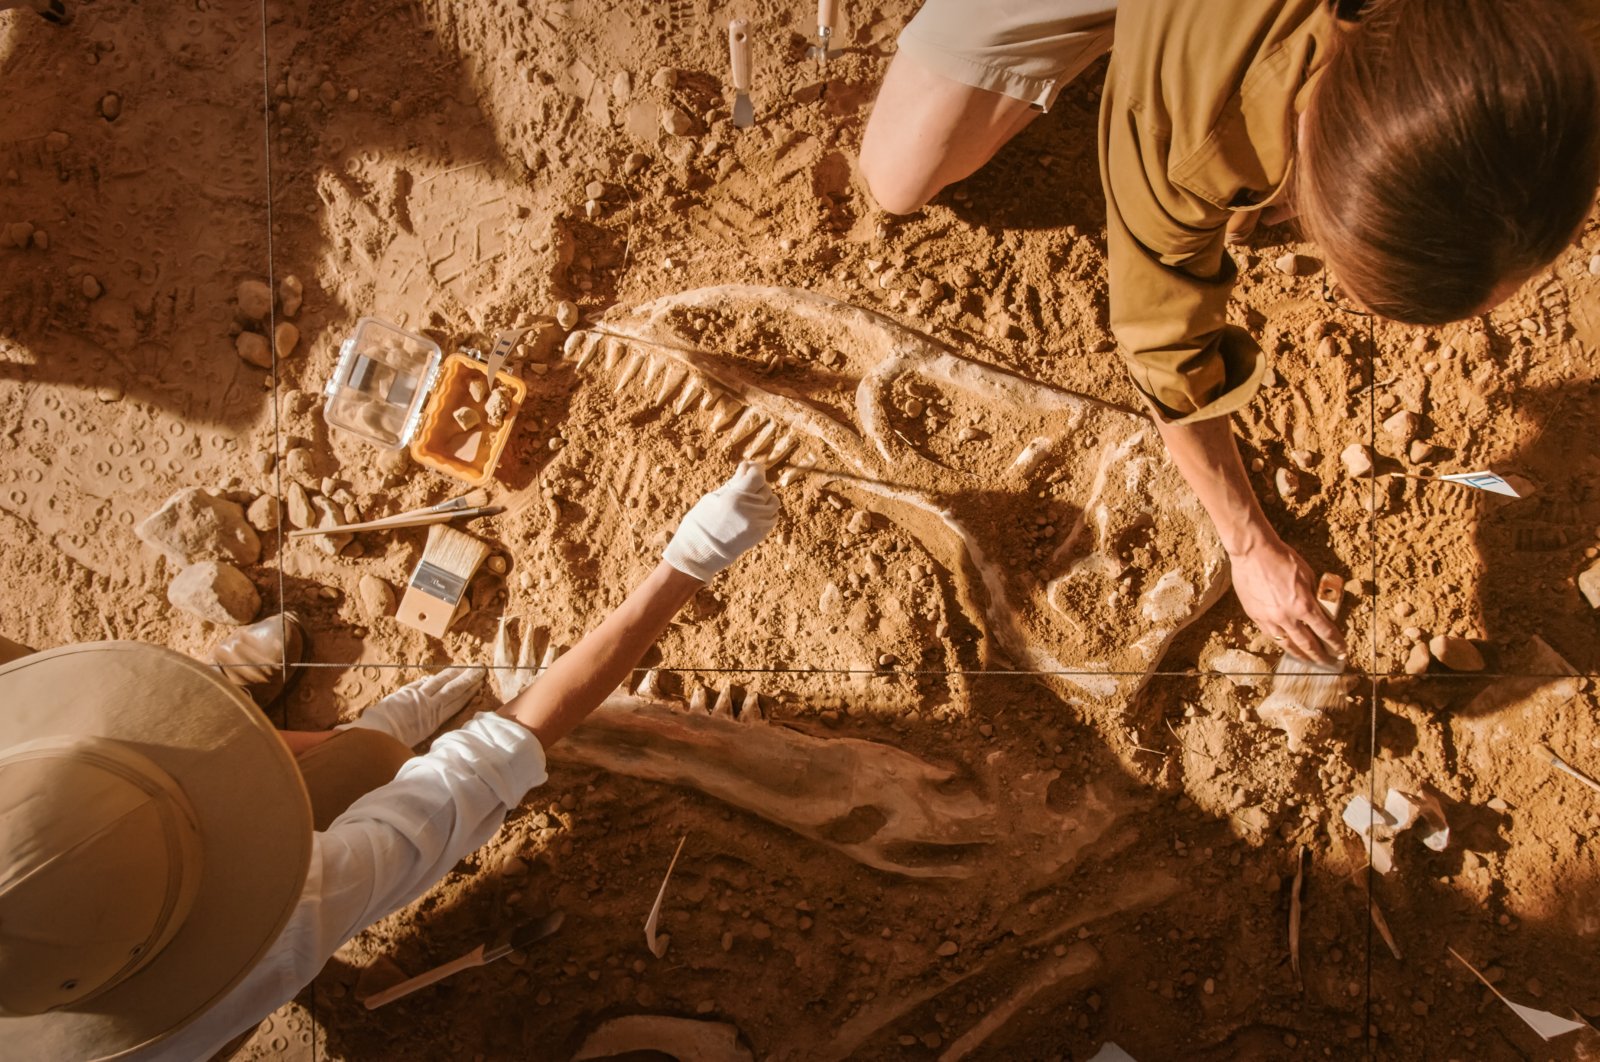 Hari Arkeologi Turki-Eropa untuk menunjukkan penelitian penggalian di belakang panggung